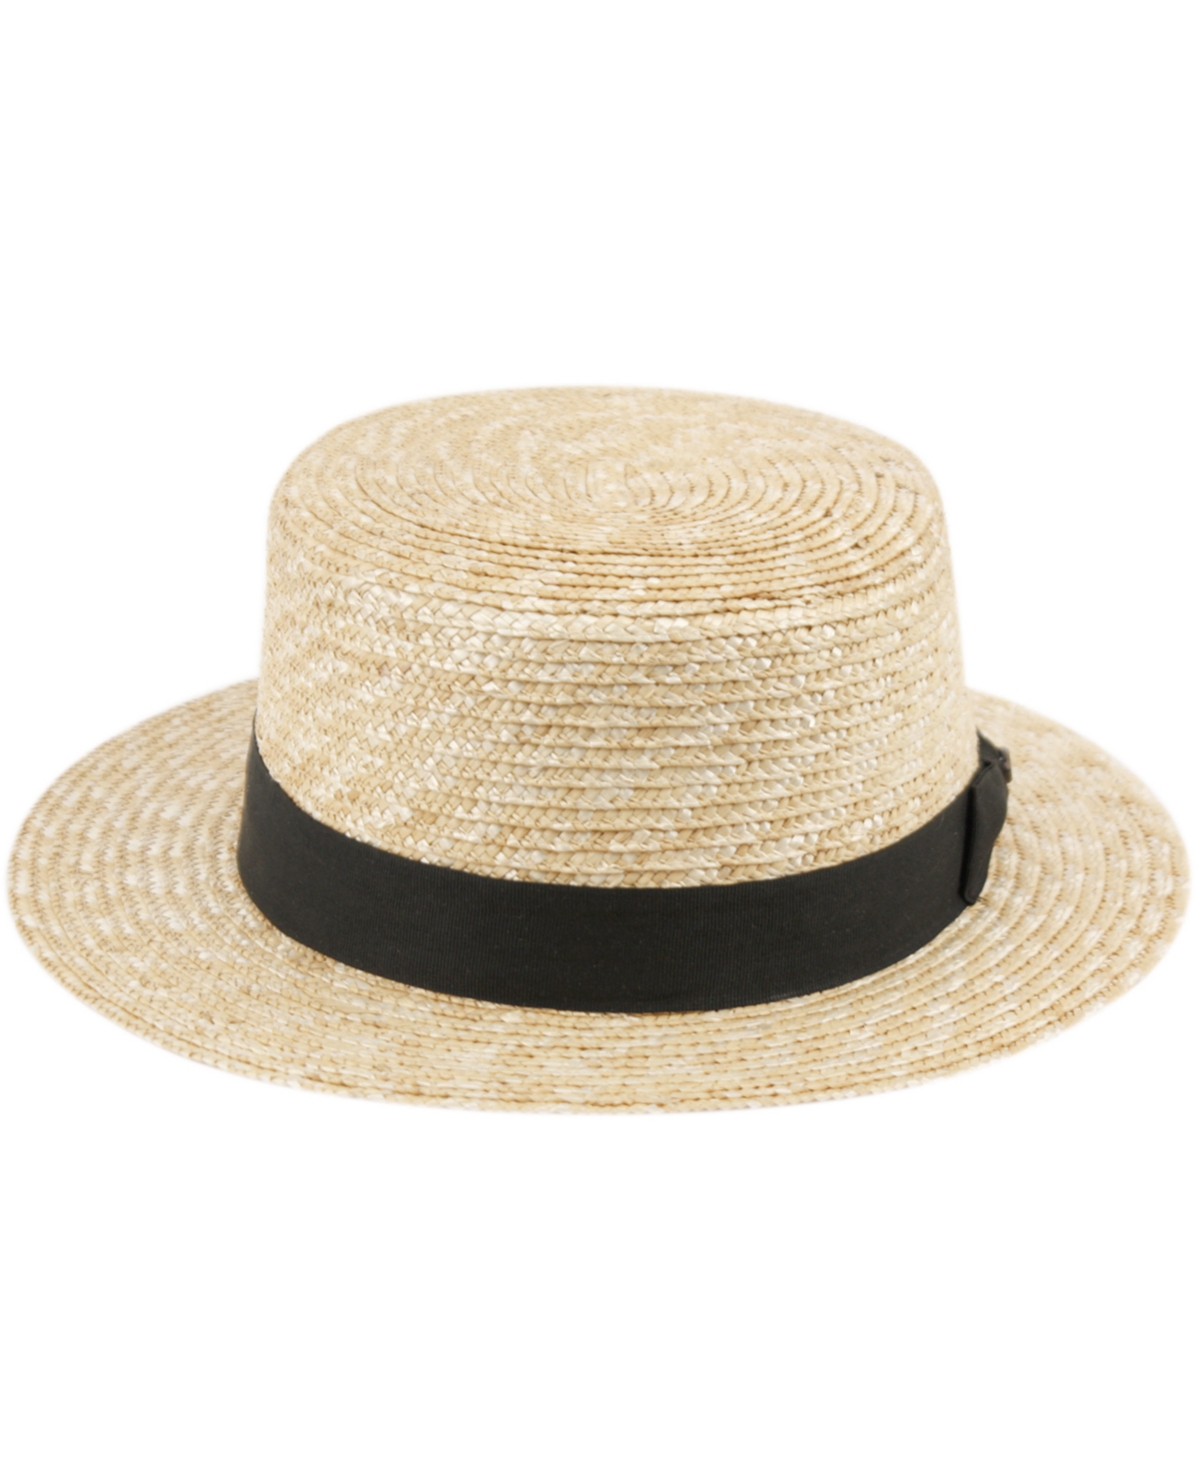 Unisex Straw Skimmer Boater Hat - Natural